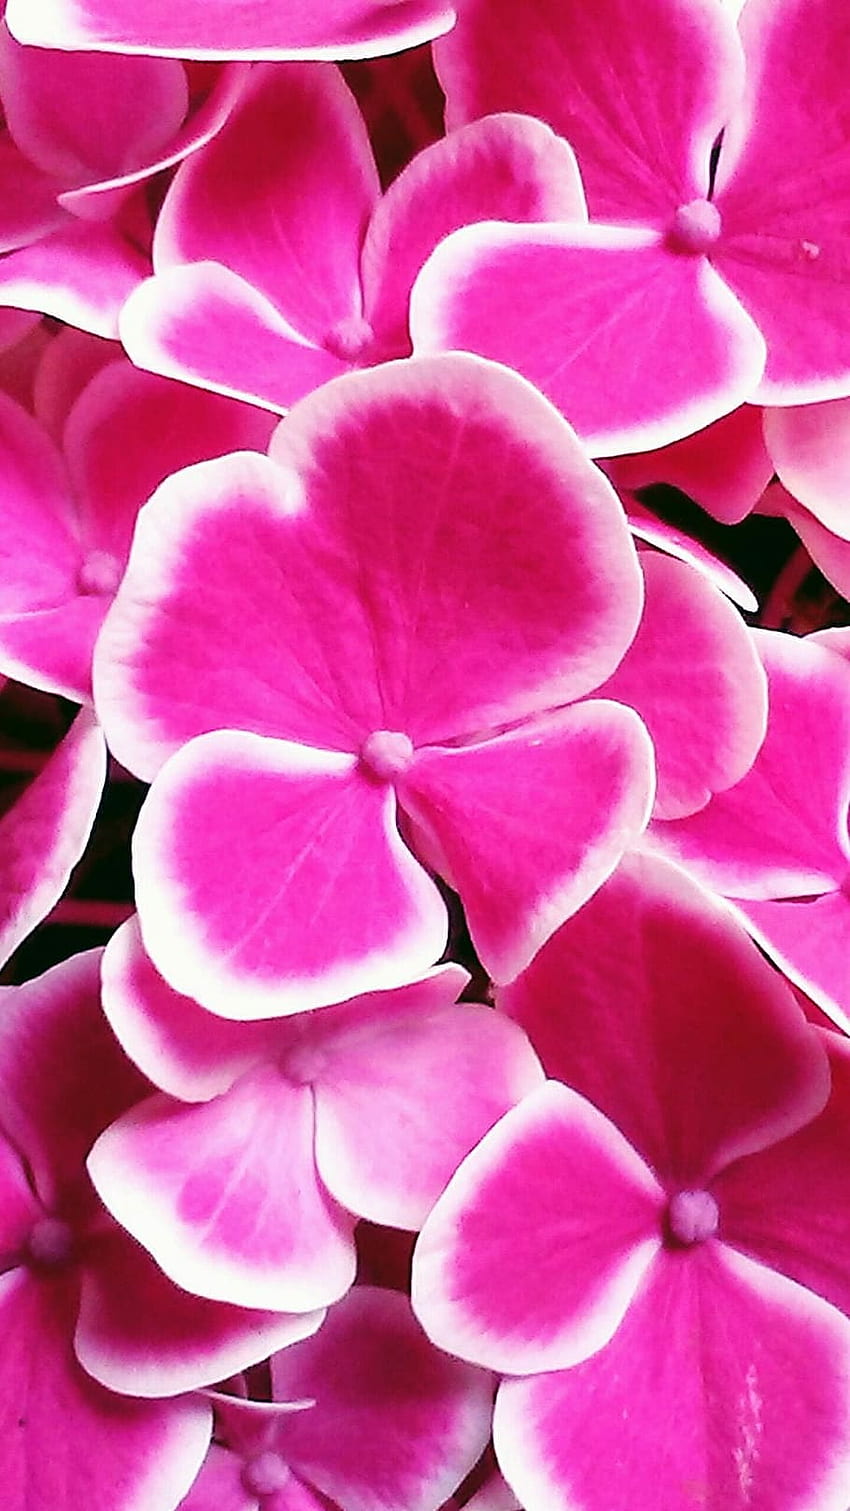 : hortensia, flor, fucsia, color rosa, planta floreciendo, belleza en la naturaleza fondo de pantalla del teléfono